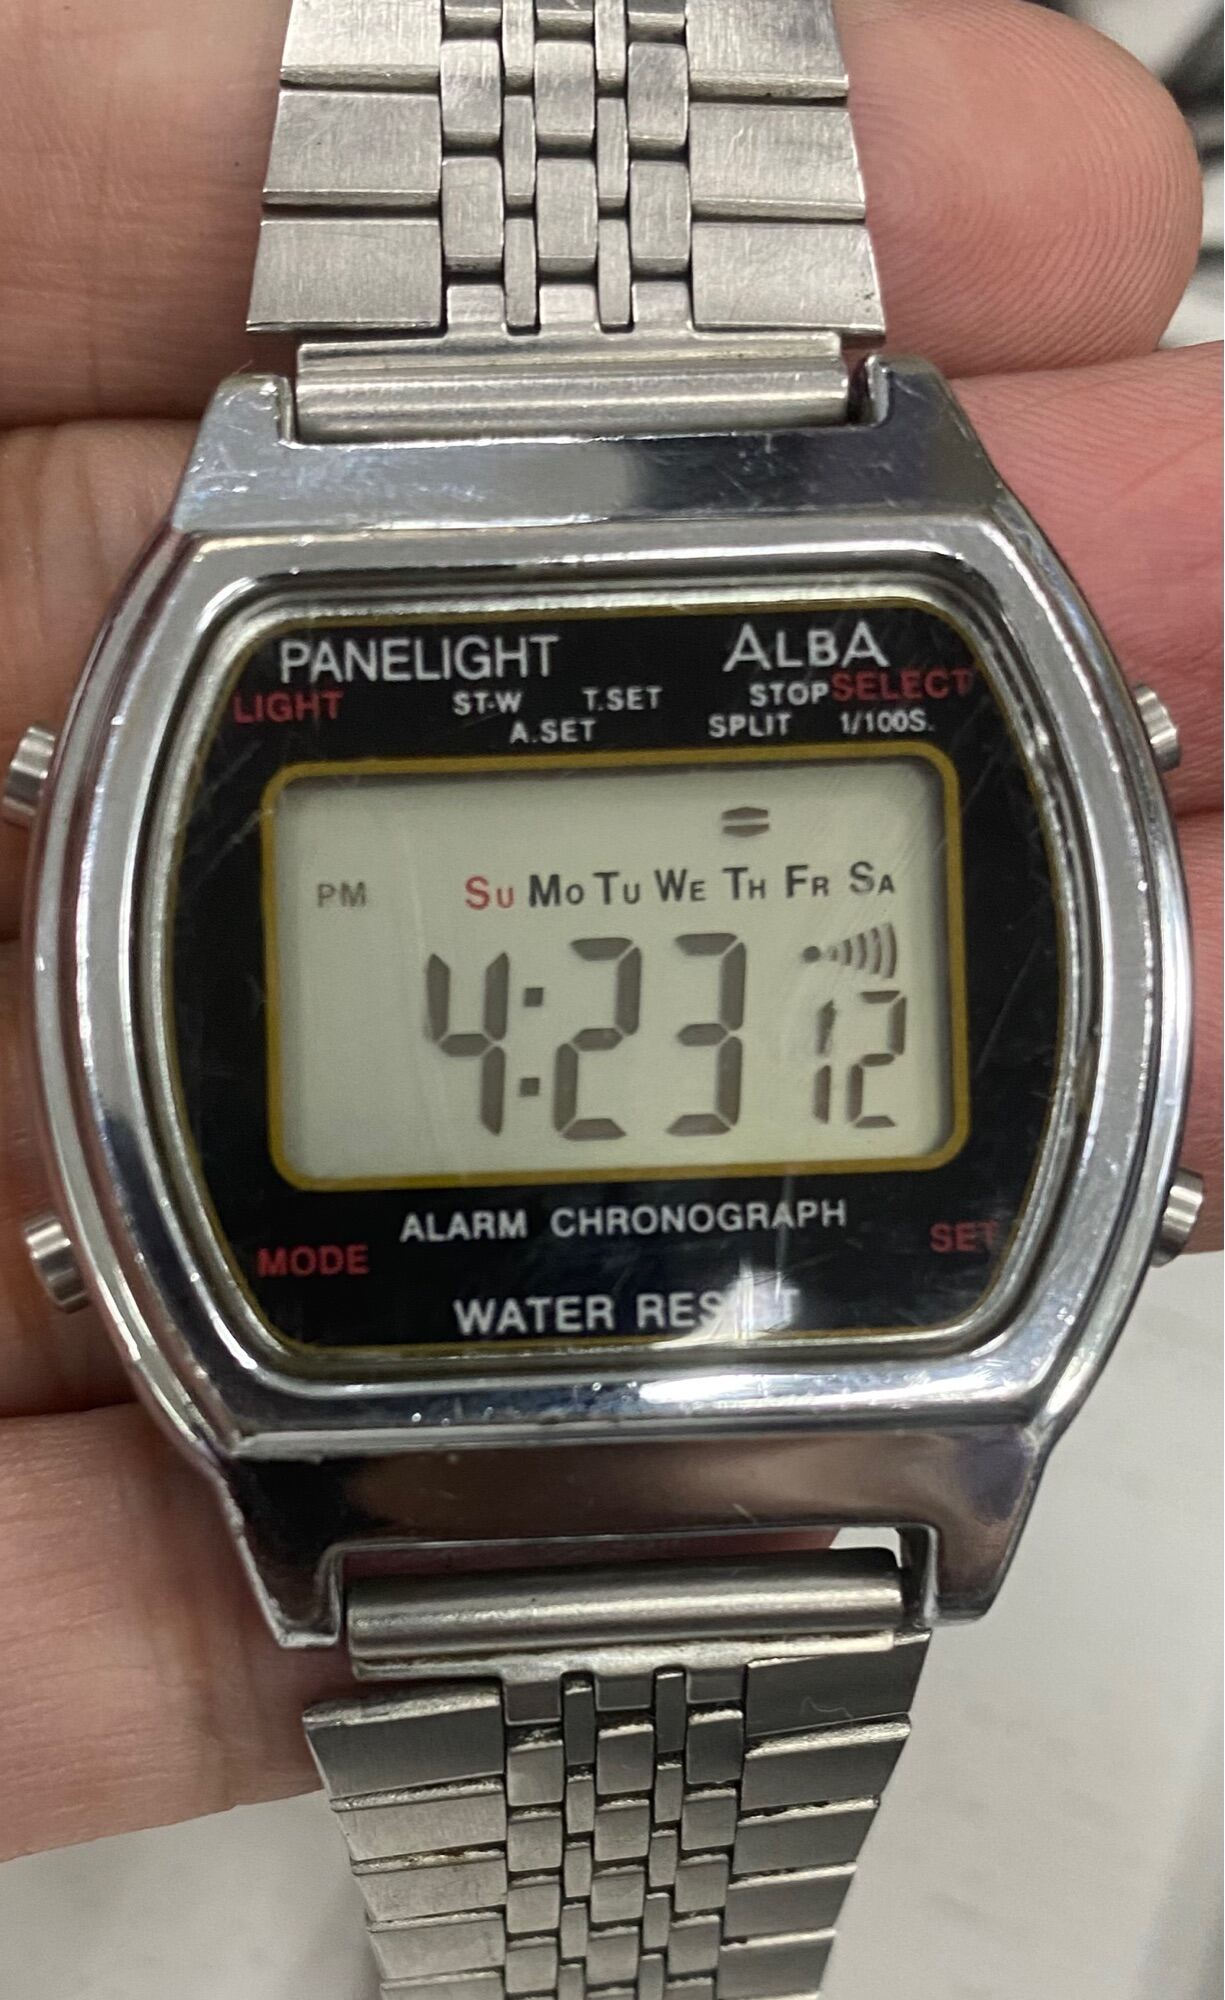 Đồng hồ nam Alba Panelight